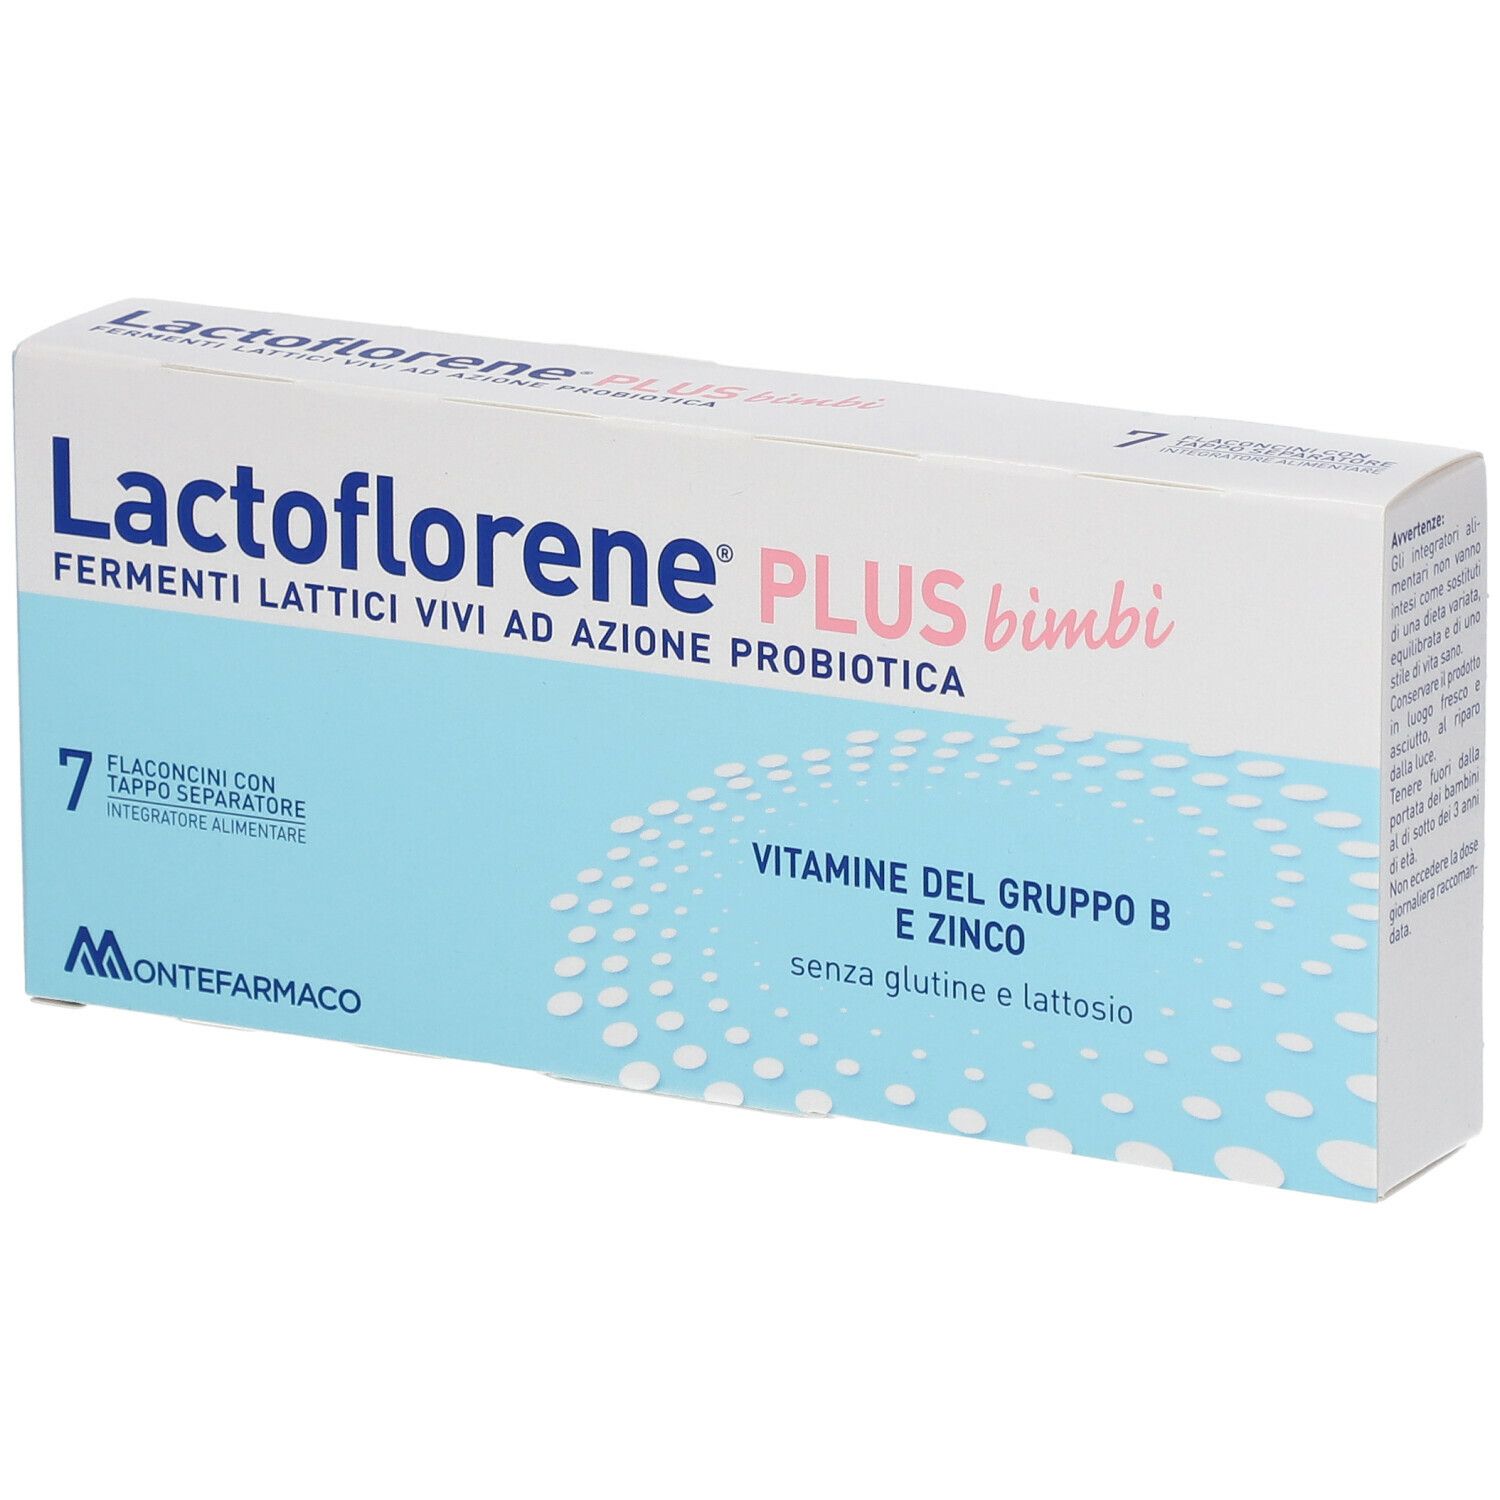 Lactoflorene® Plus Bimbi